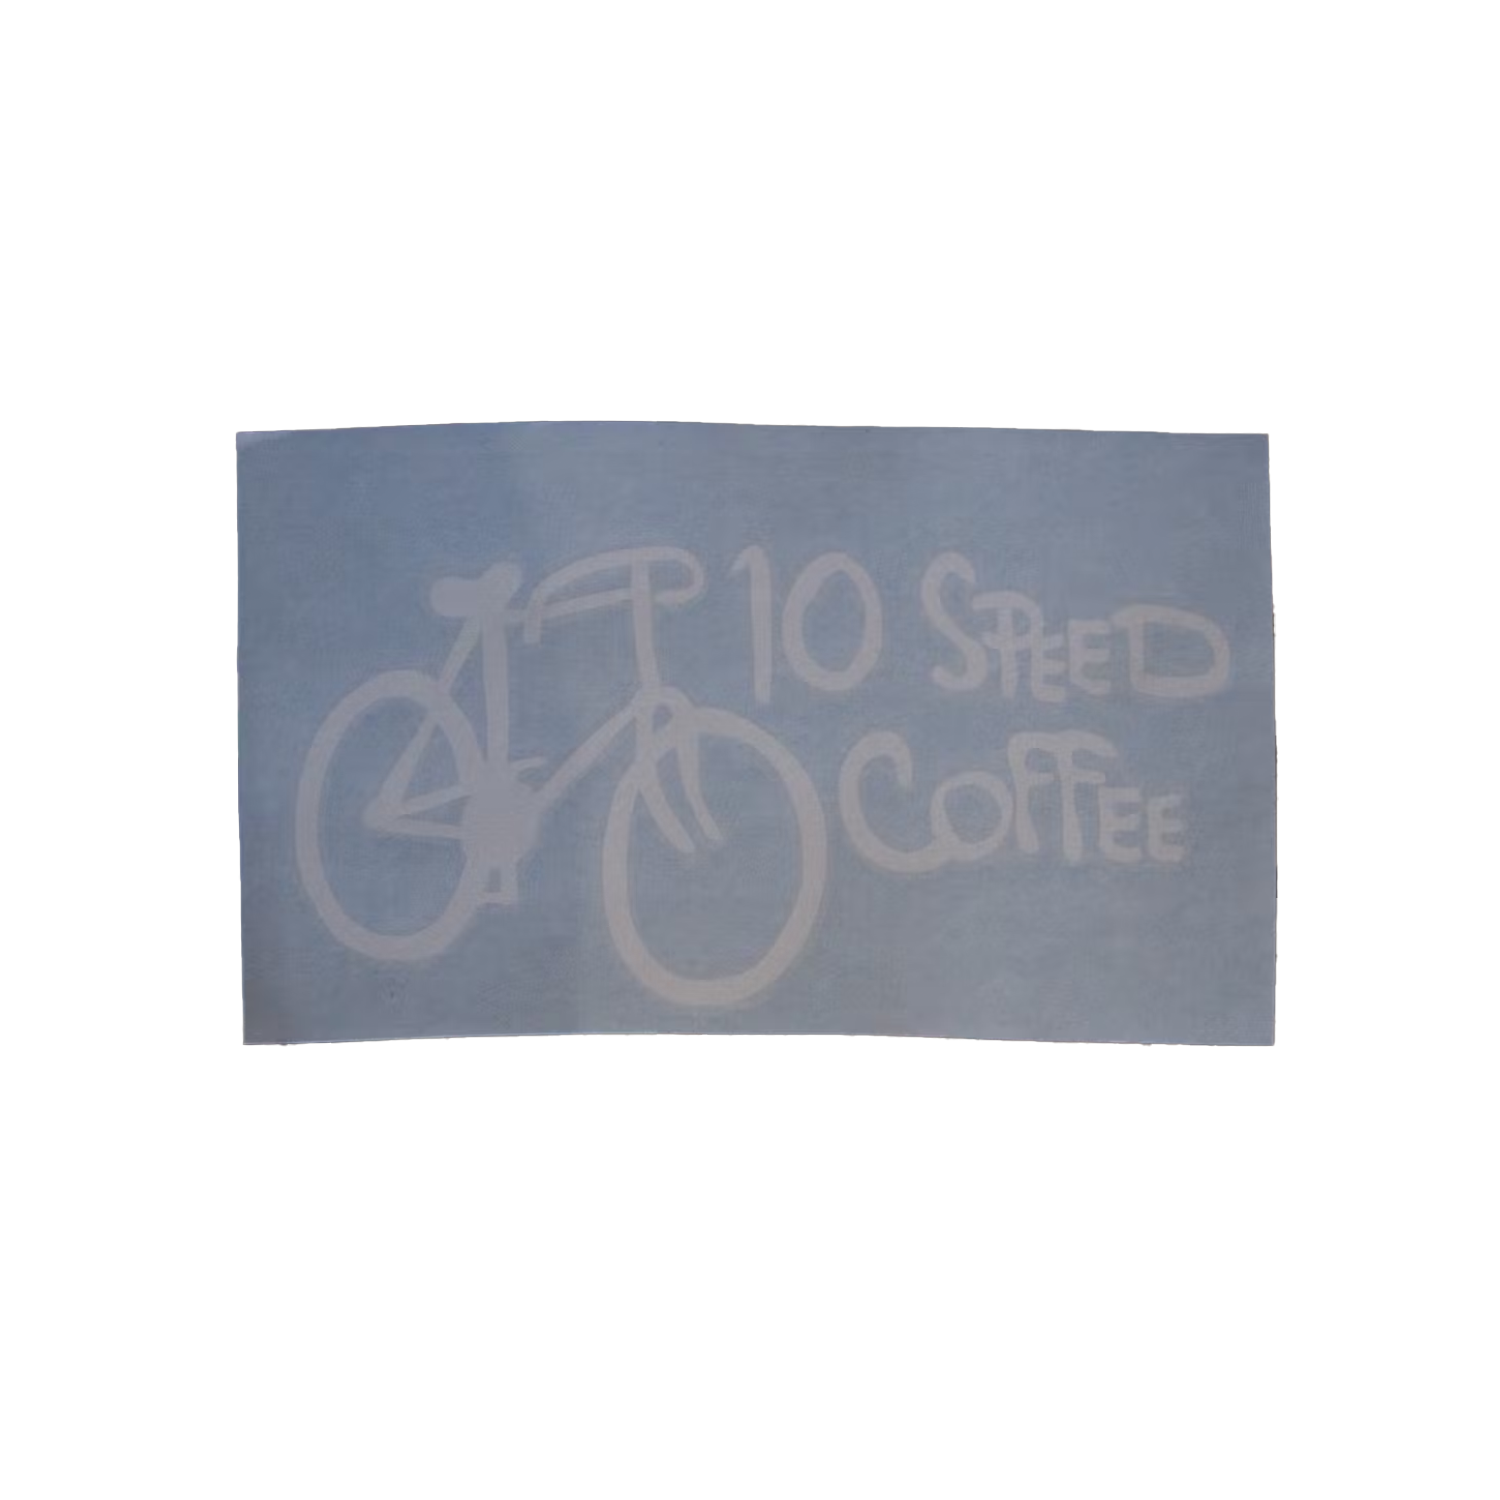 Vinyl sticker with 10 Speed Coffee logo